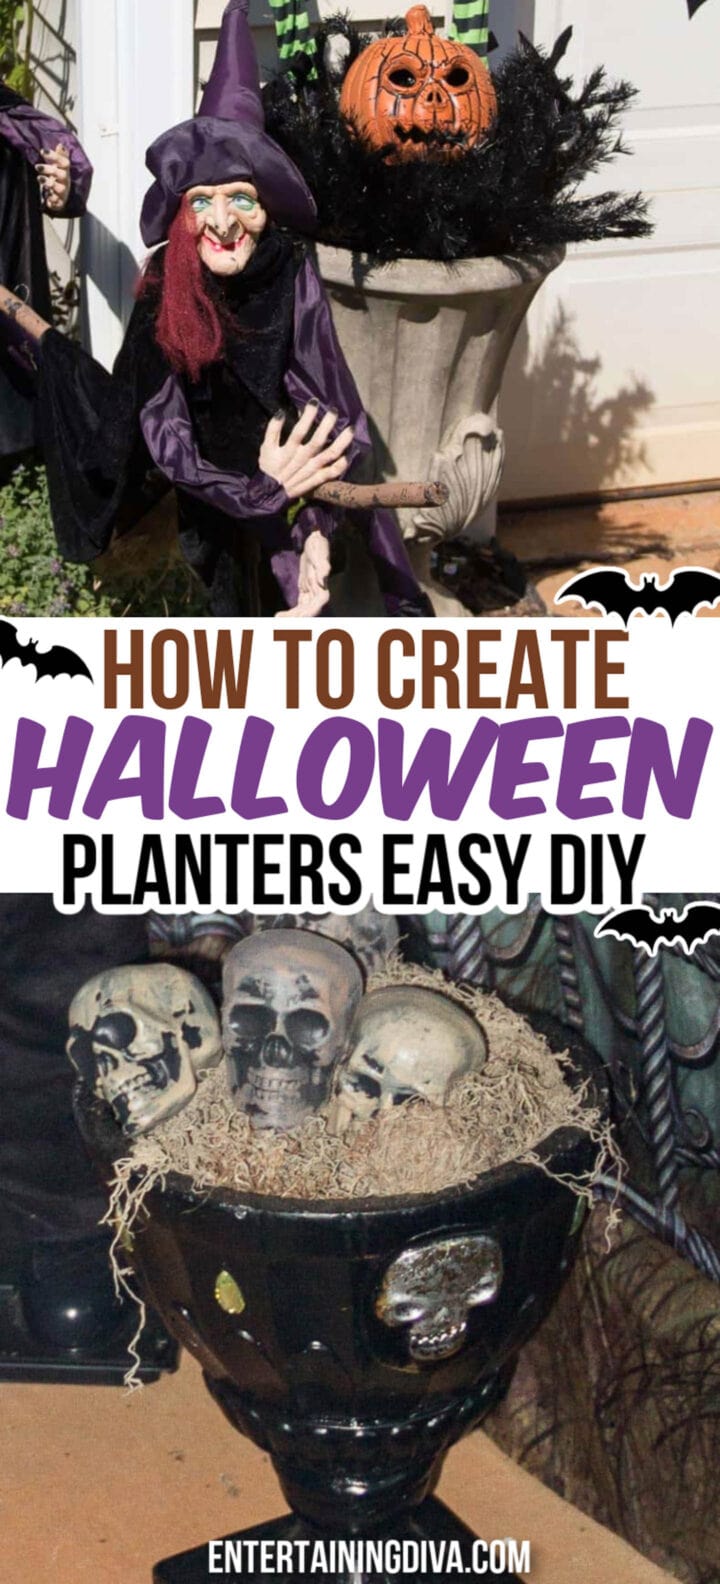 DIY Halloween planters.